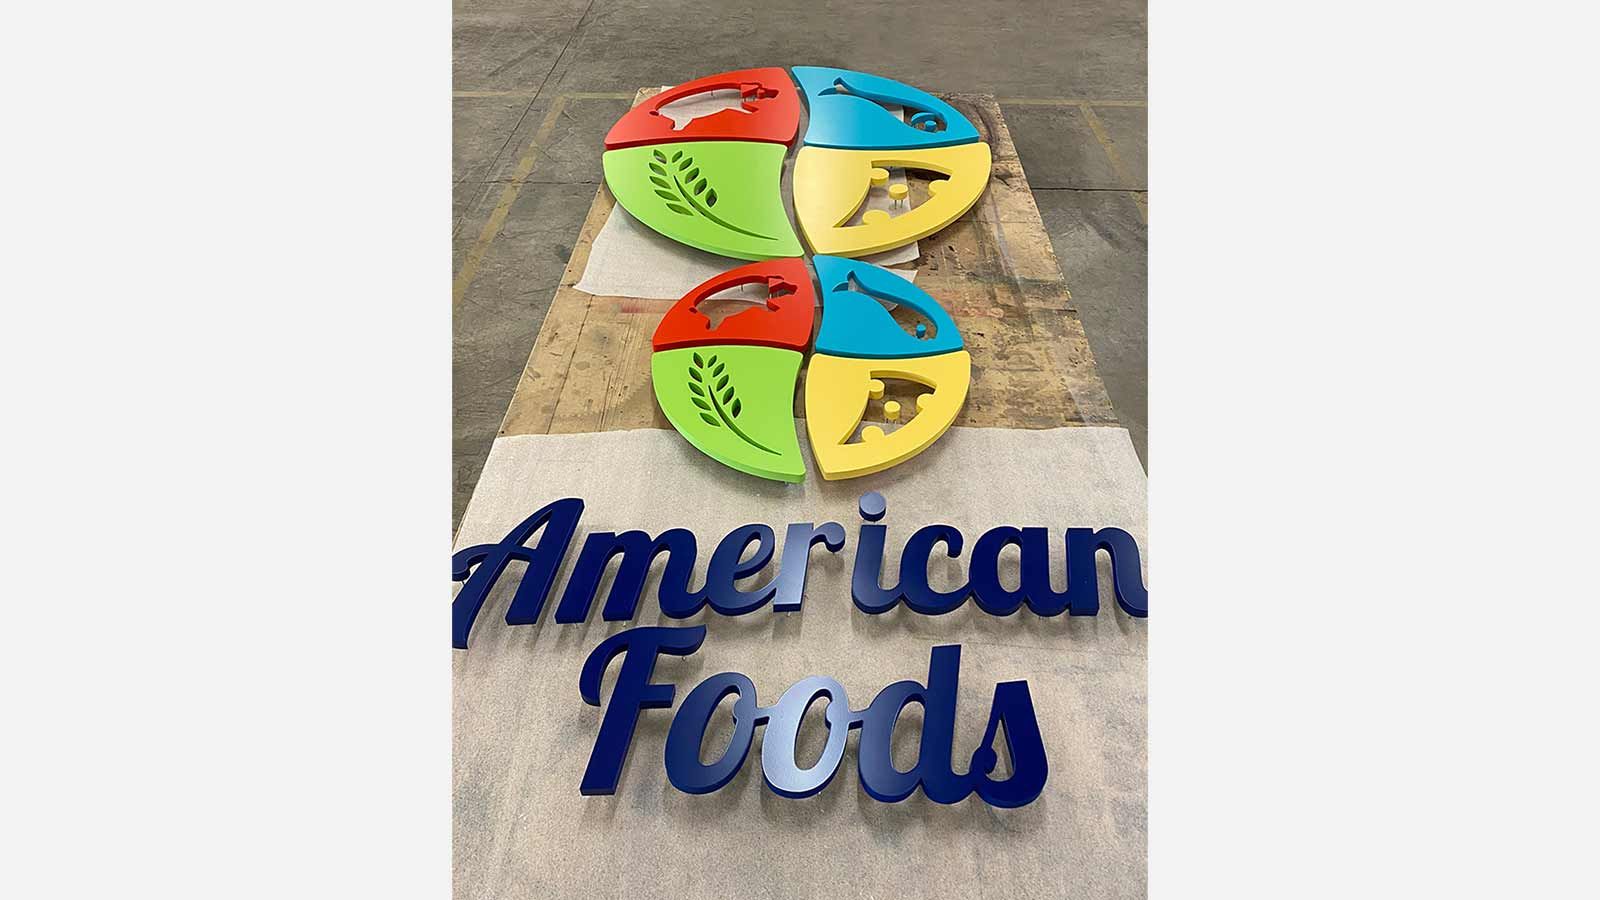 american foods logo made of acrylic